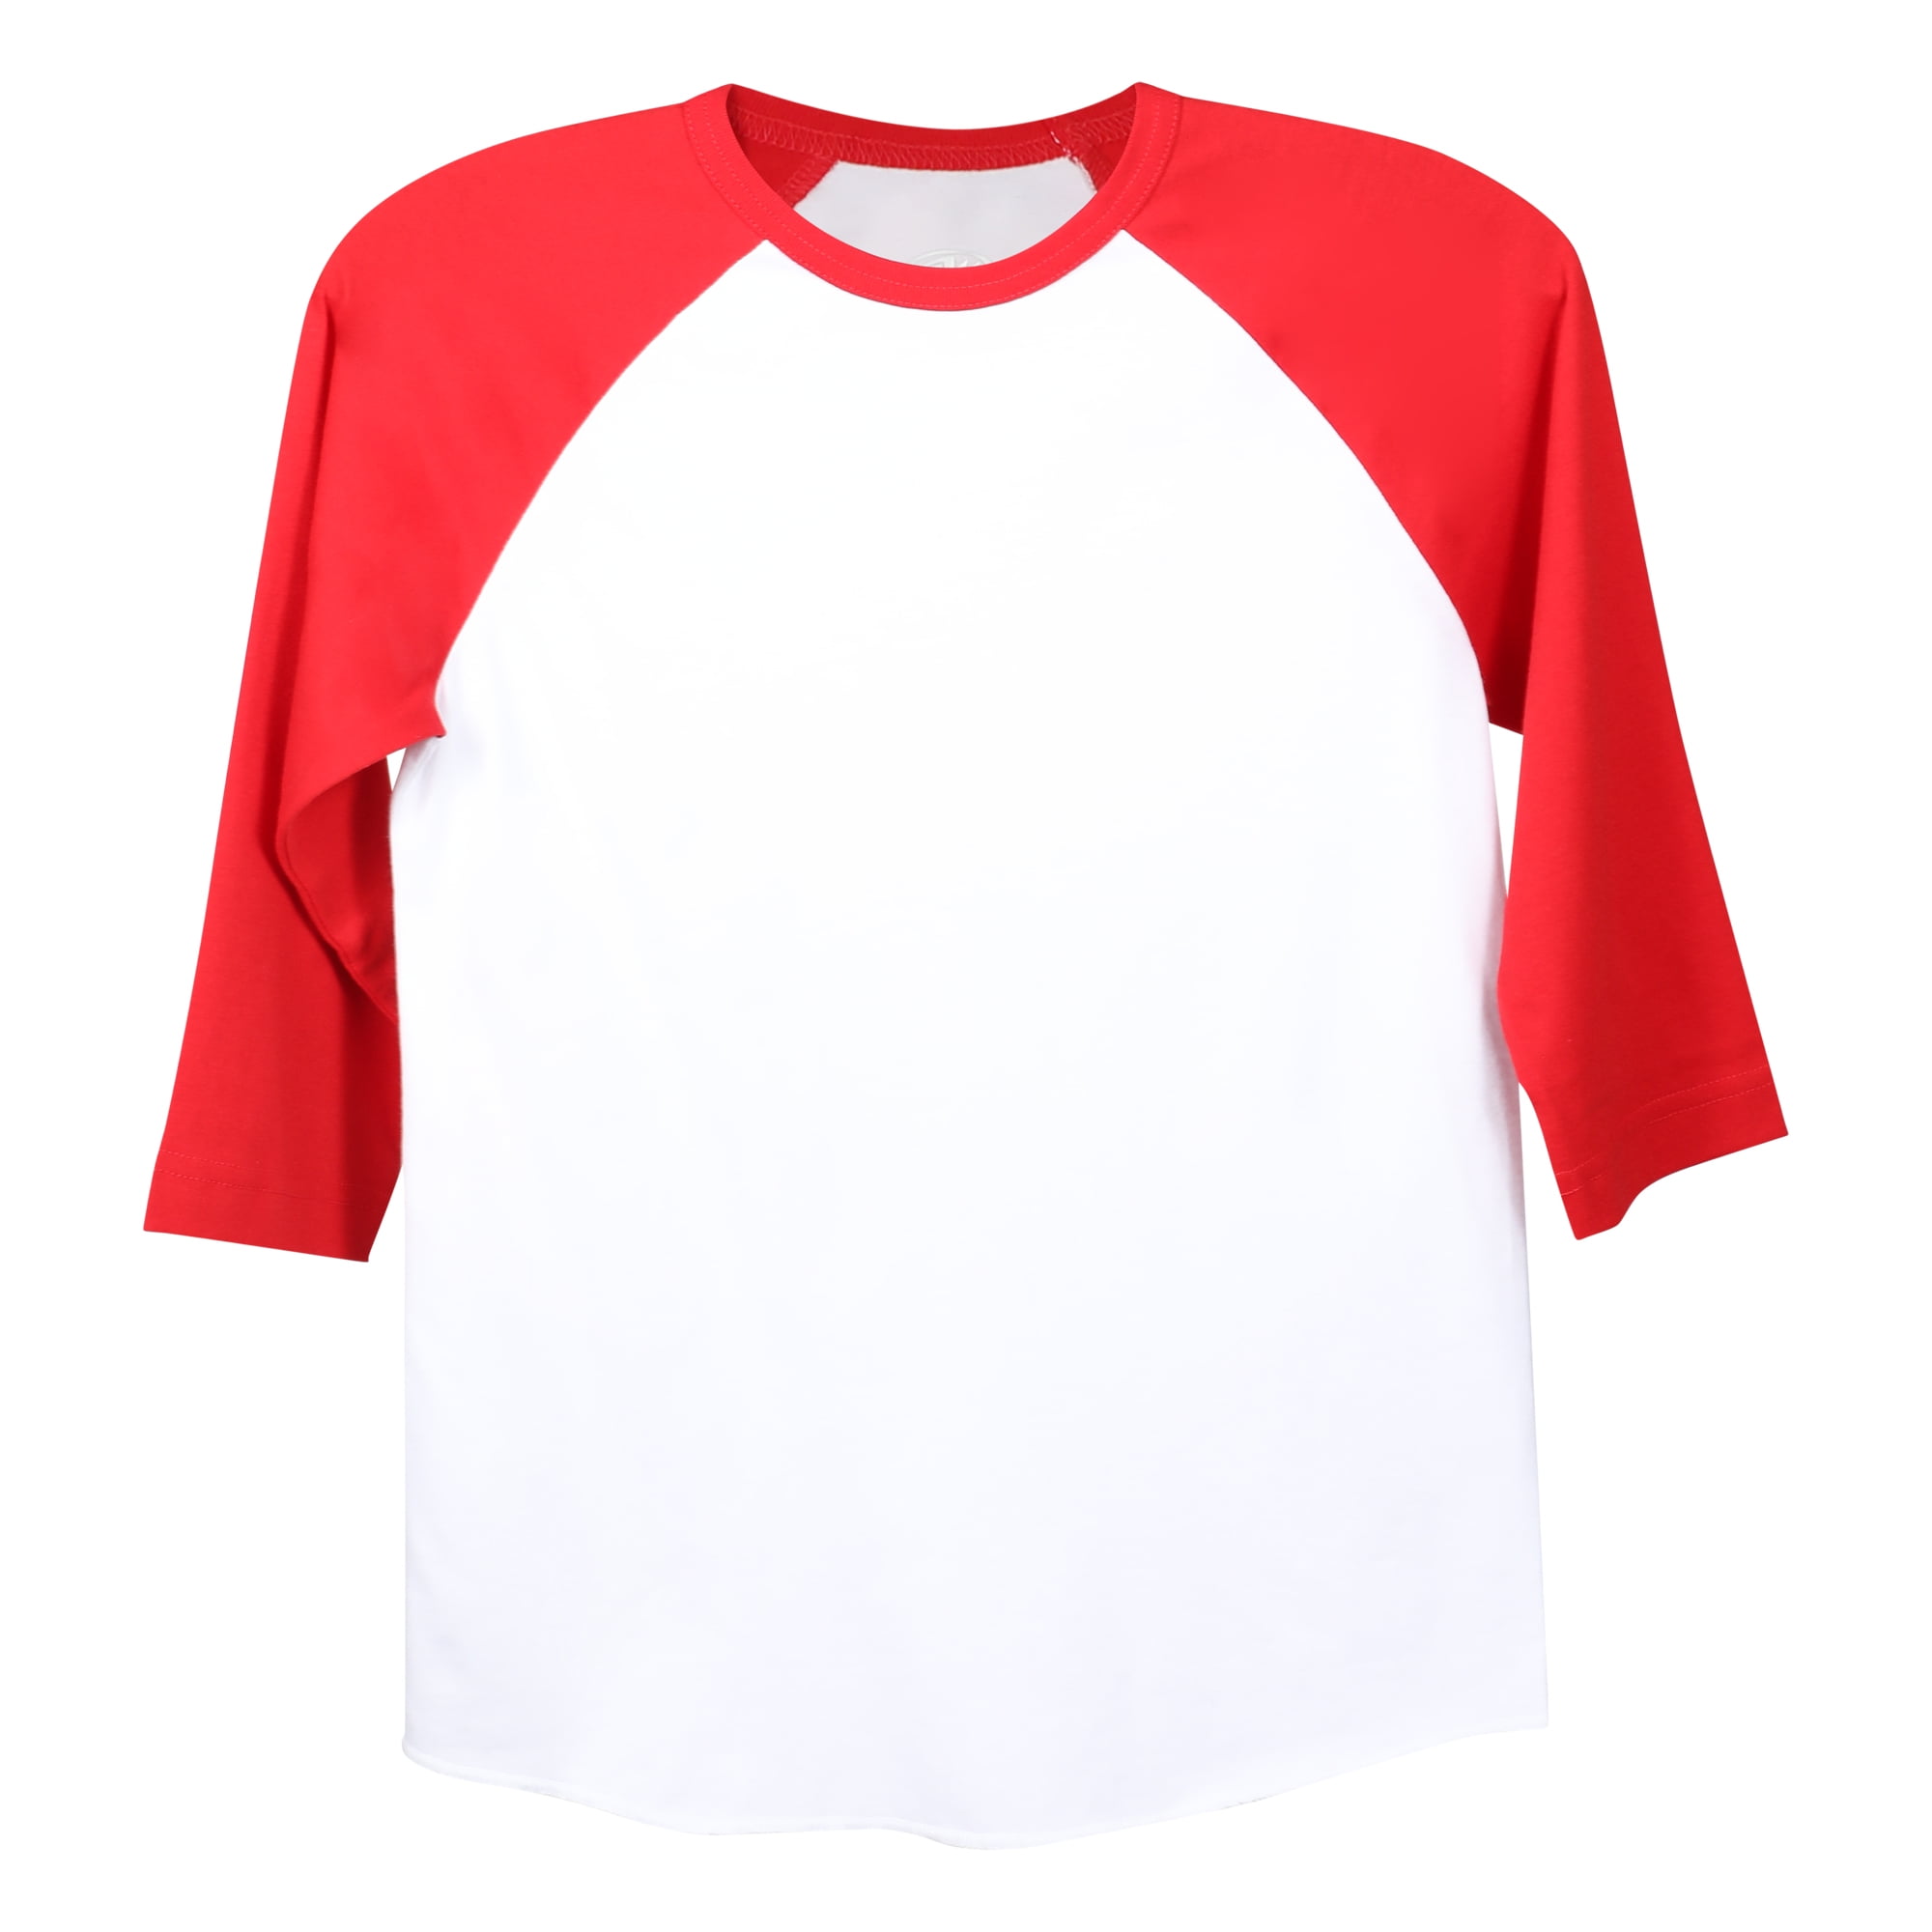 MLB Youth and Little Boys Kids Houston Astros Baseball Raglan Shirt, Brick Red - X-Large (14-16)